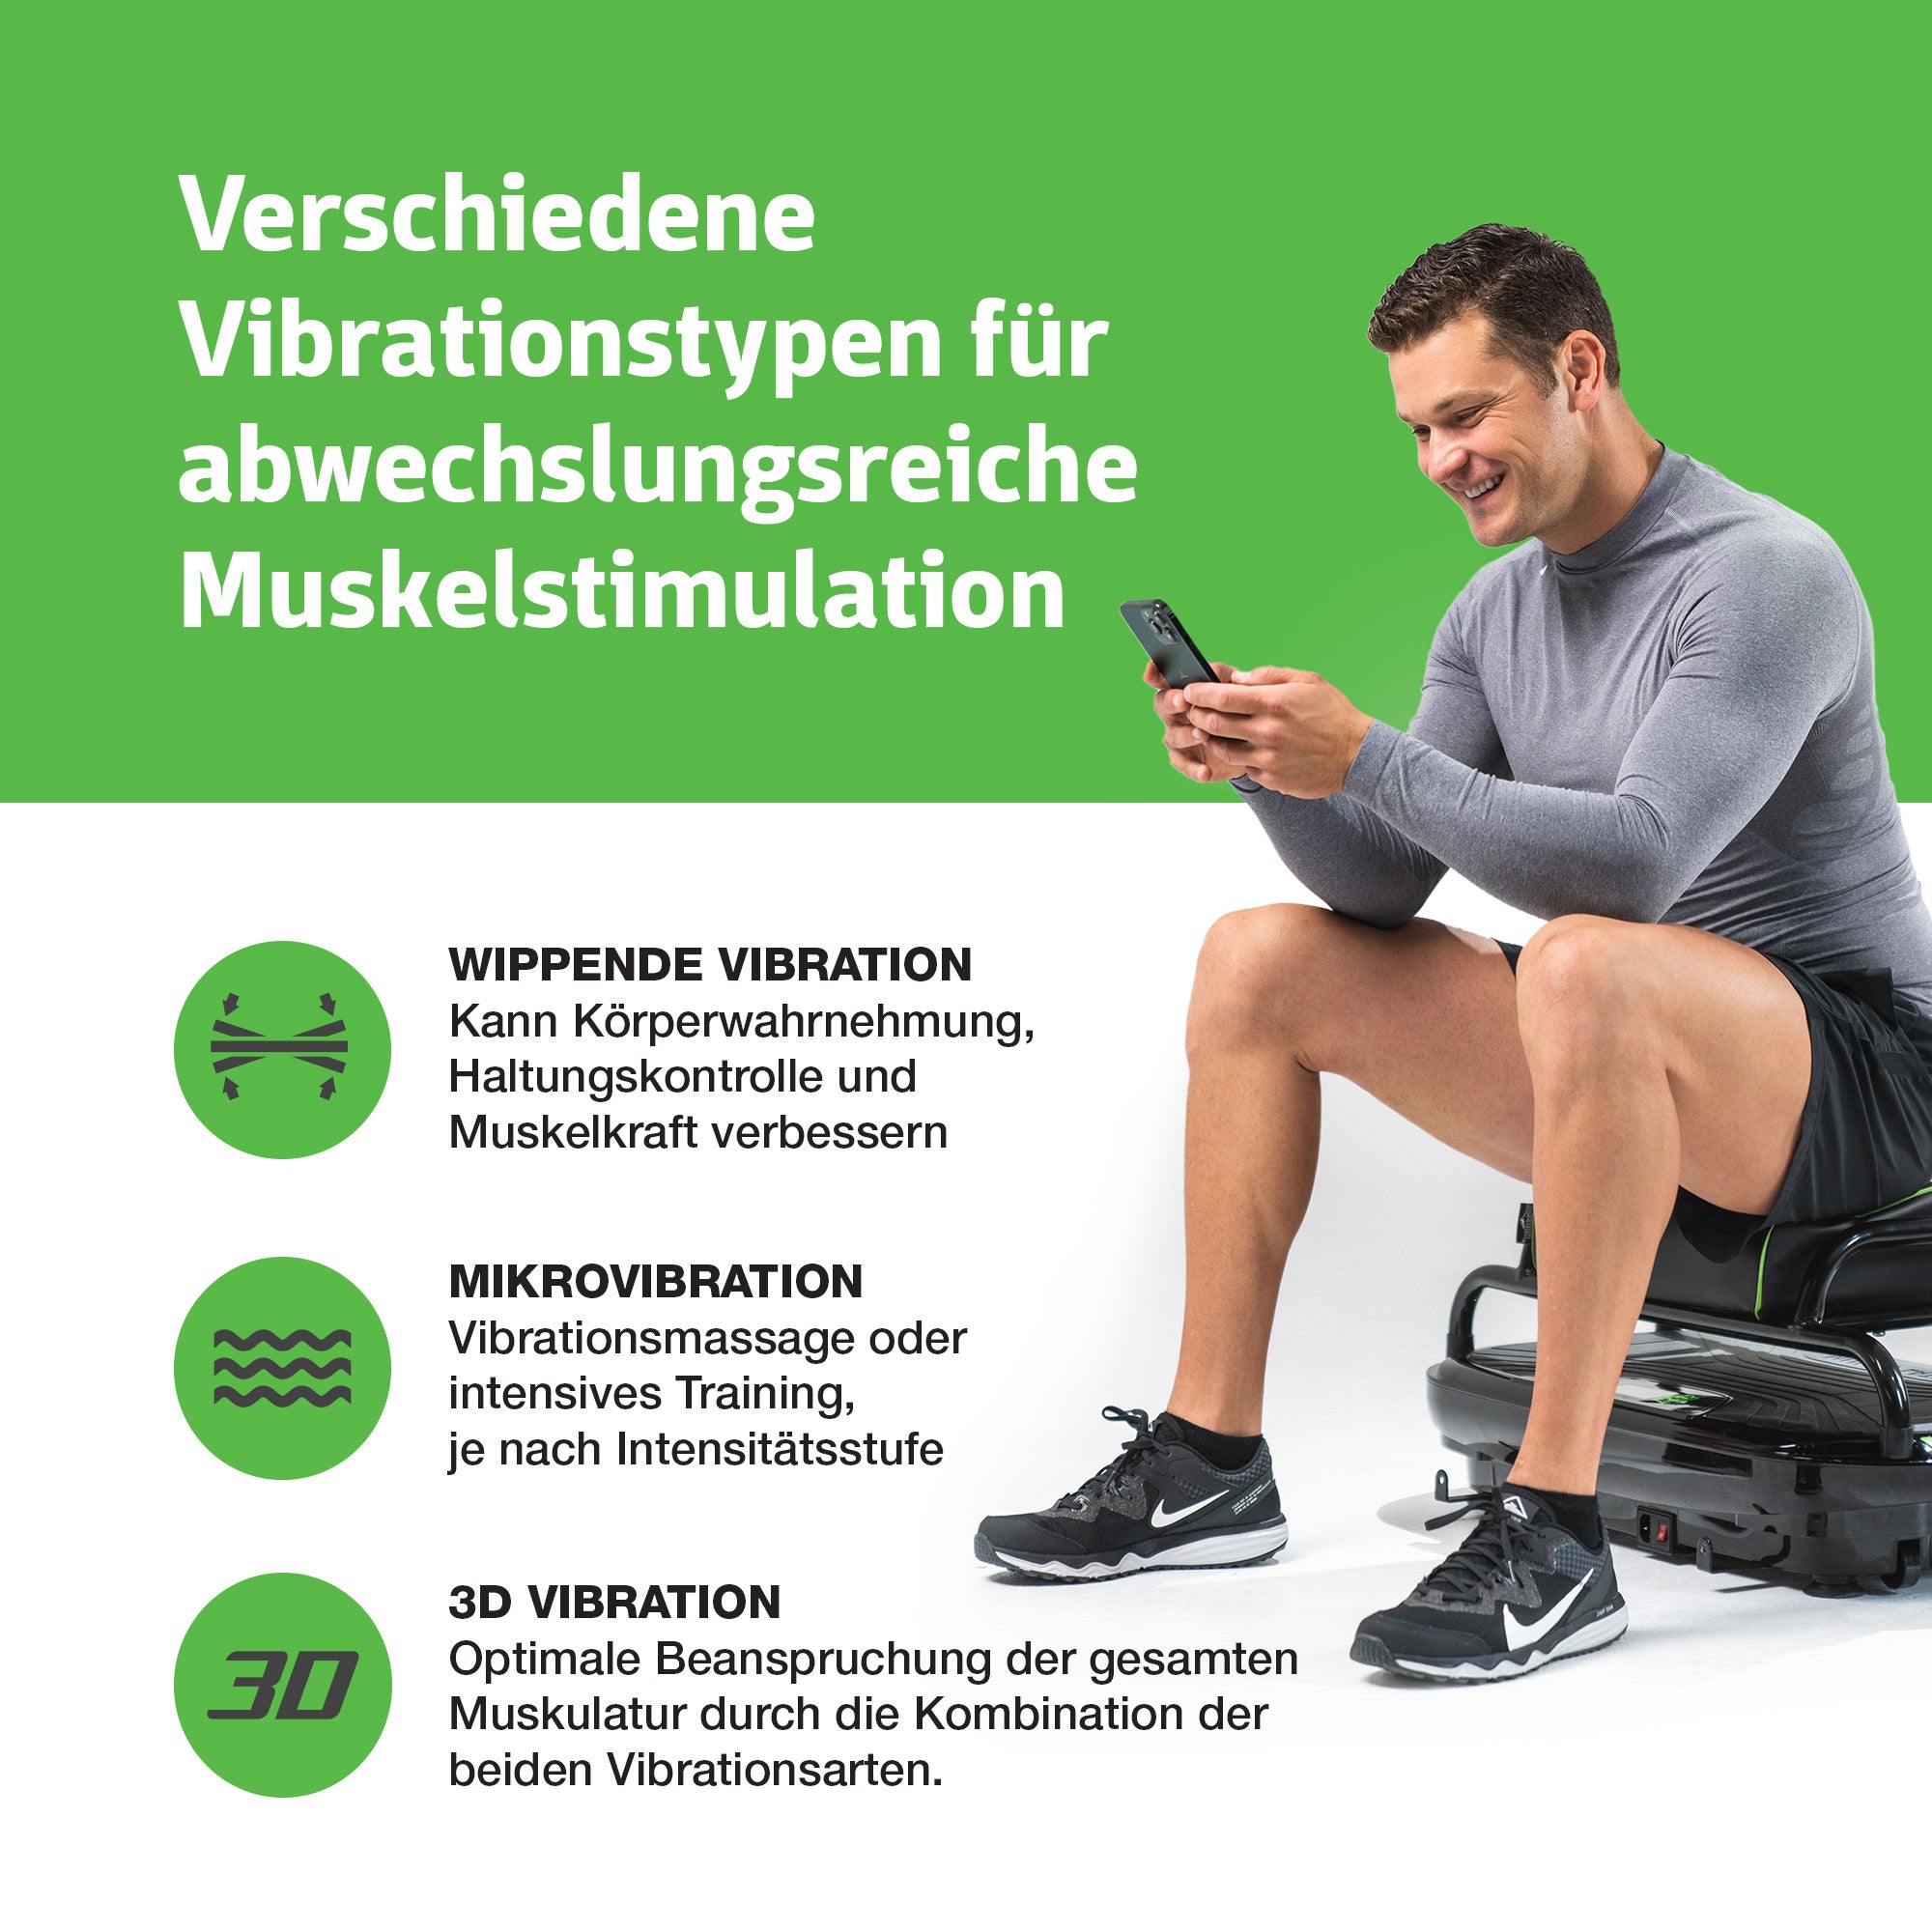 Vibrationstypen bei der Vibrationsplatte Sport im Set mit dem Sportsitz: wippende Vibration, Mikrovibration und 3D Vibration